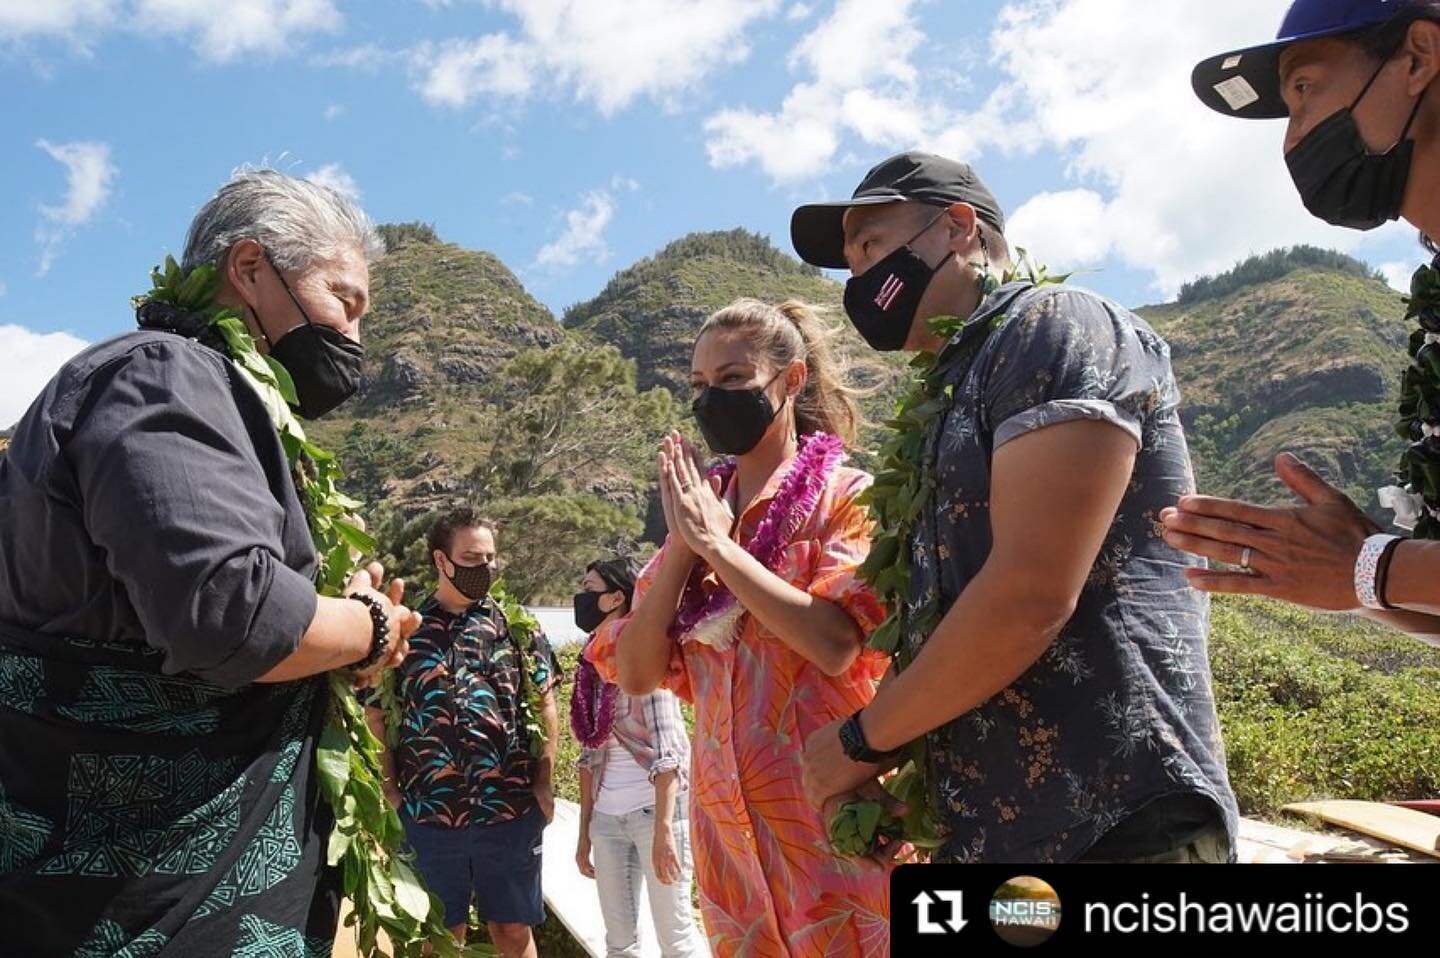 🤙 wonderful meeting everyone. 

@ncishawaiicbs 
・・・
Aloha! Production has officially started on #NCISHawaii. See you this fall on @cbstv and @ParamountPlus.